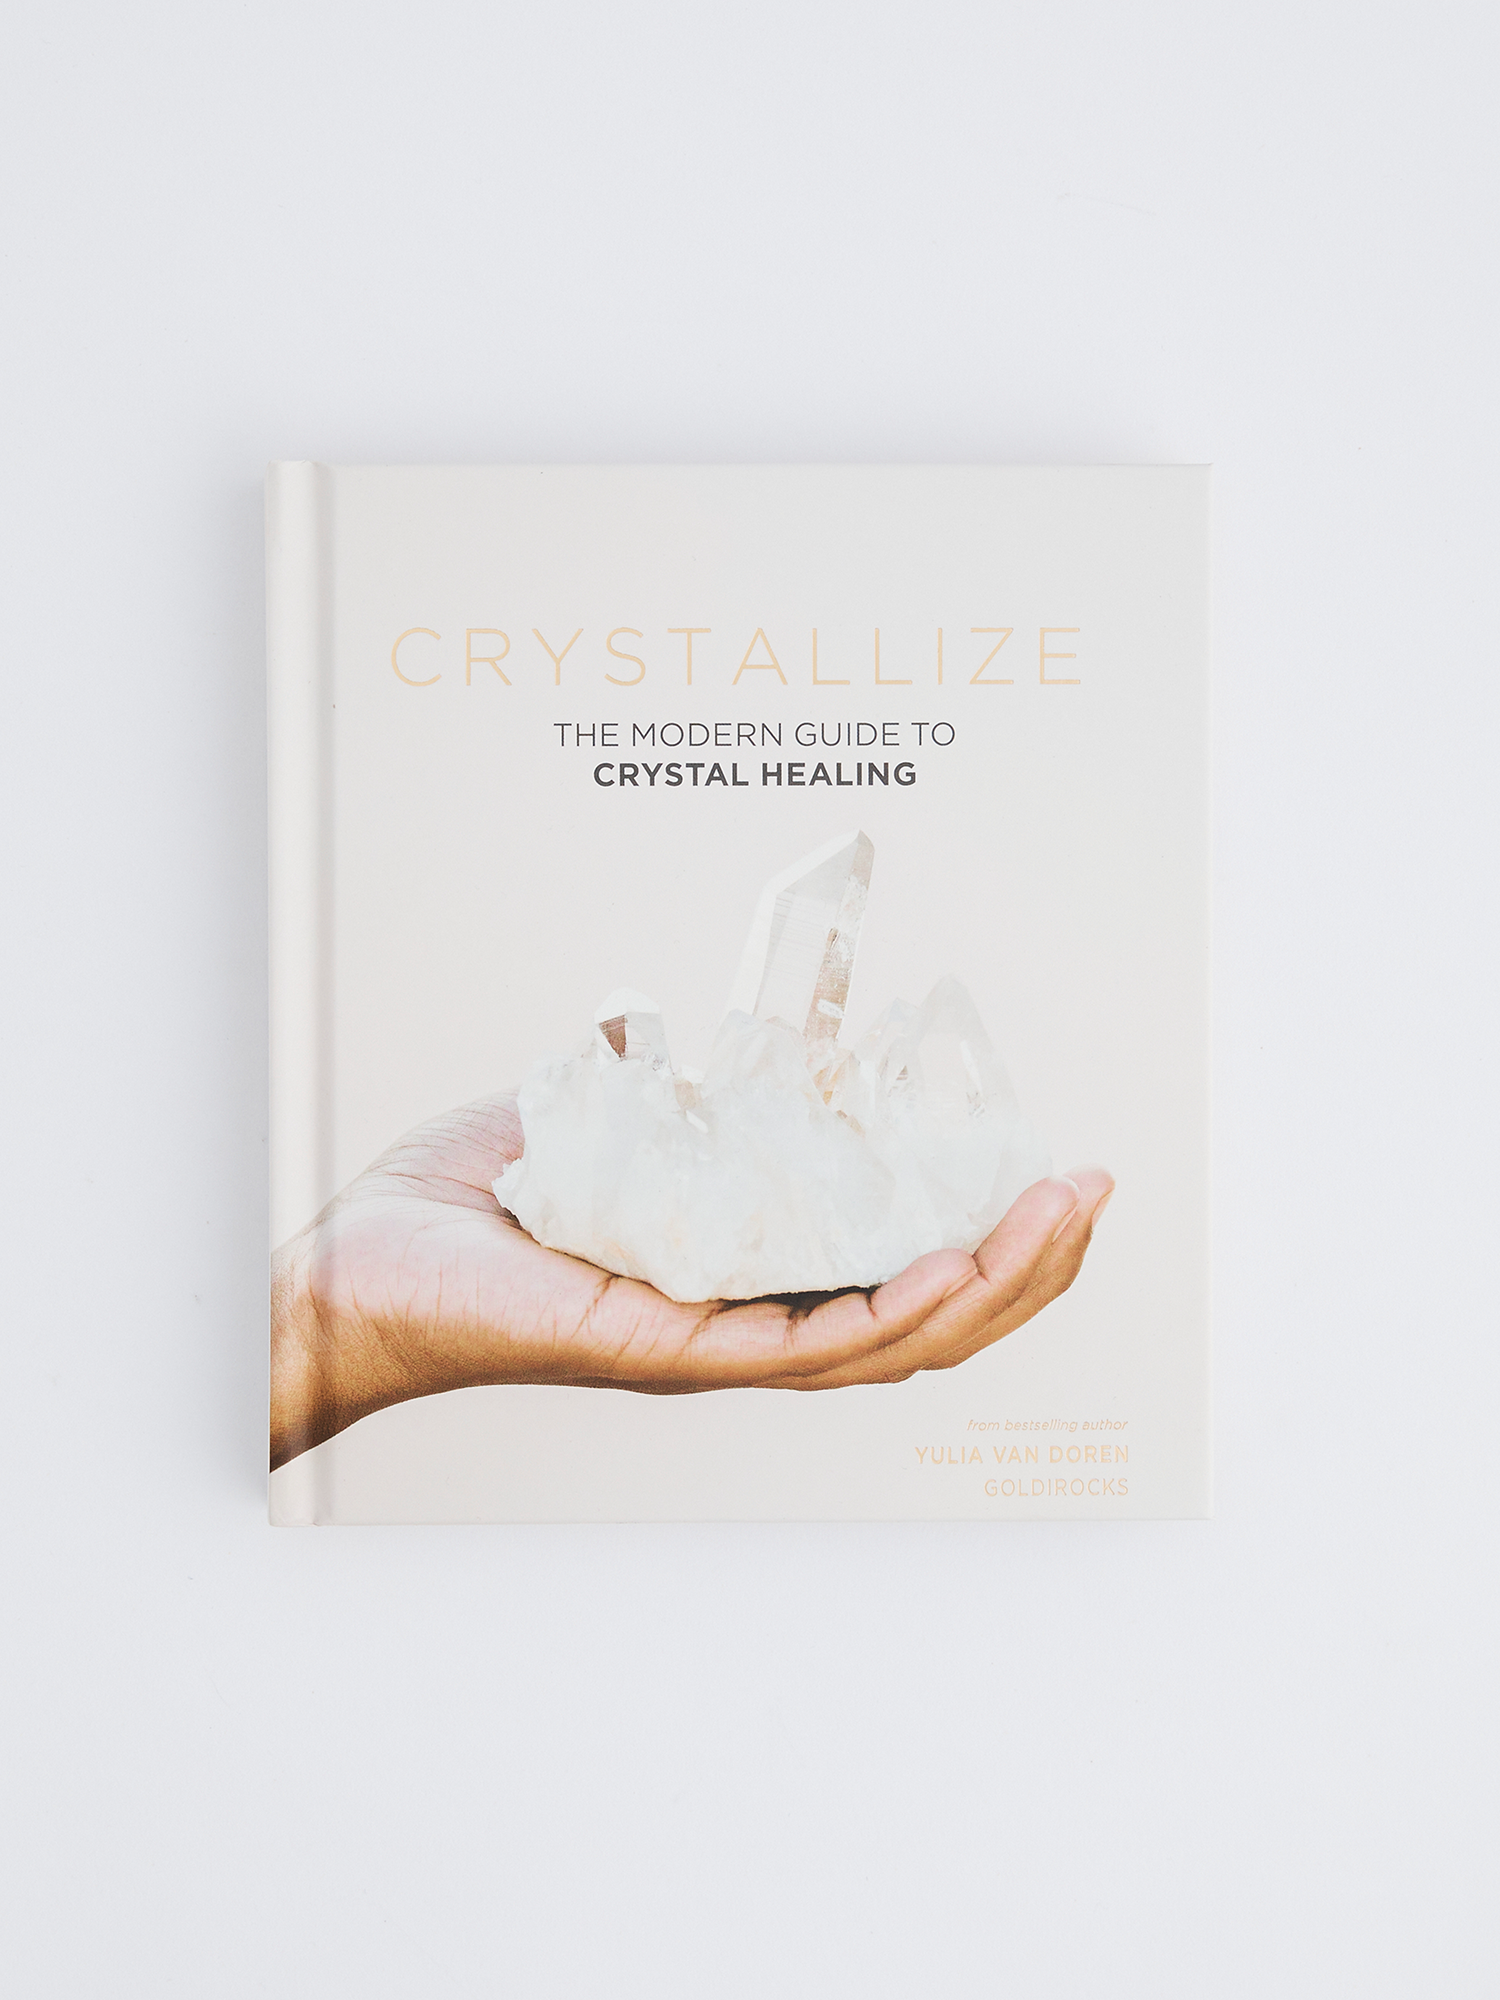 crystallize : the modern guide to crystal healing | yulia van doren